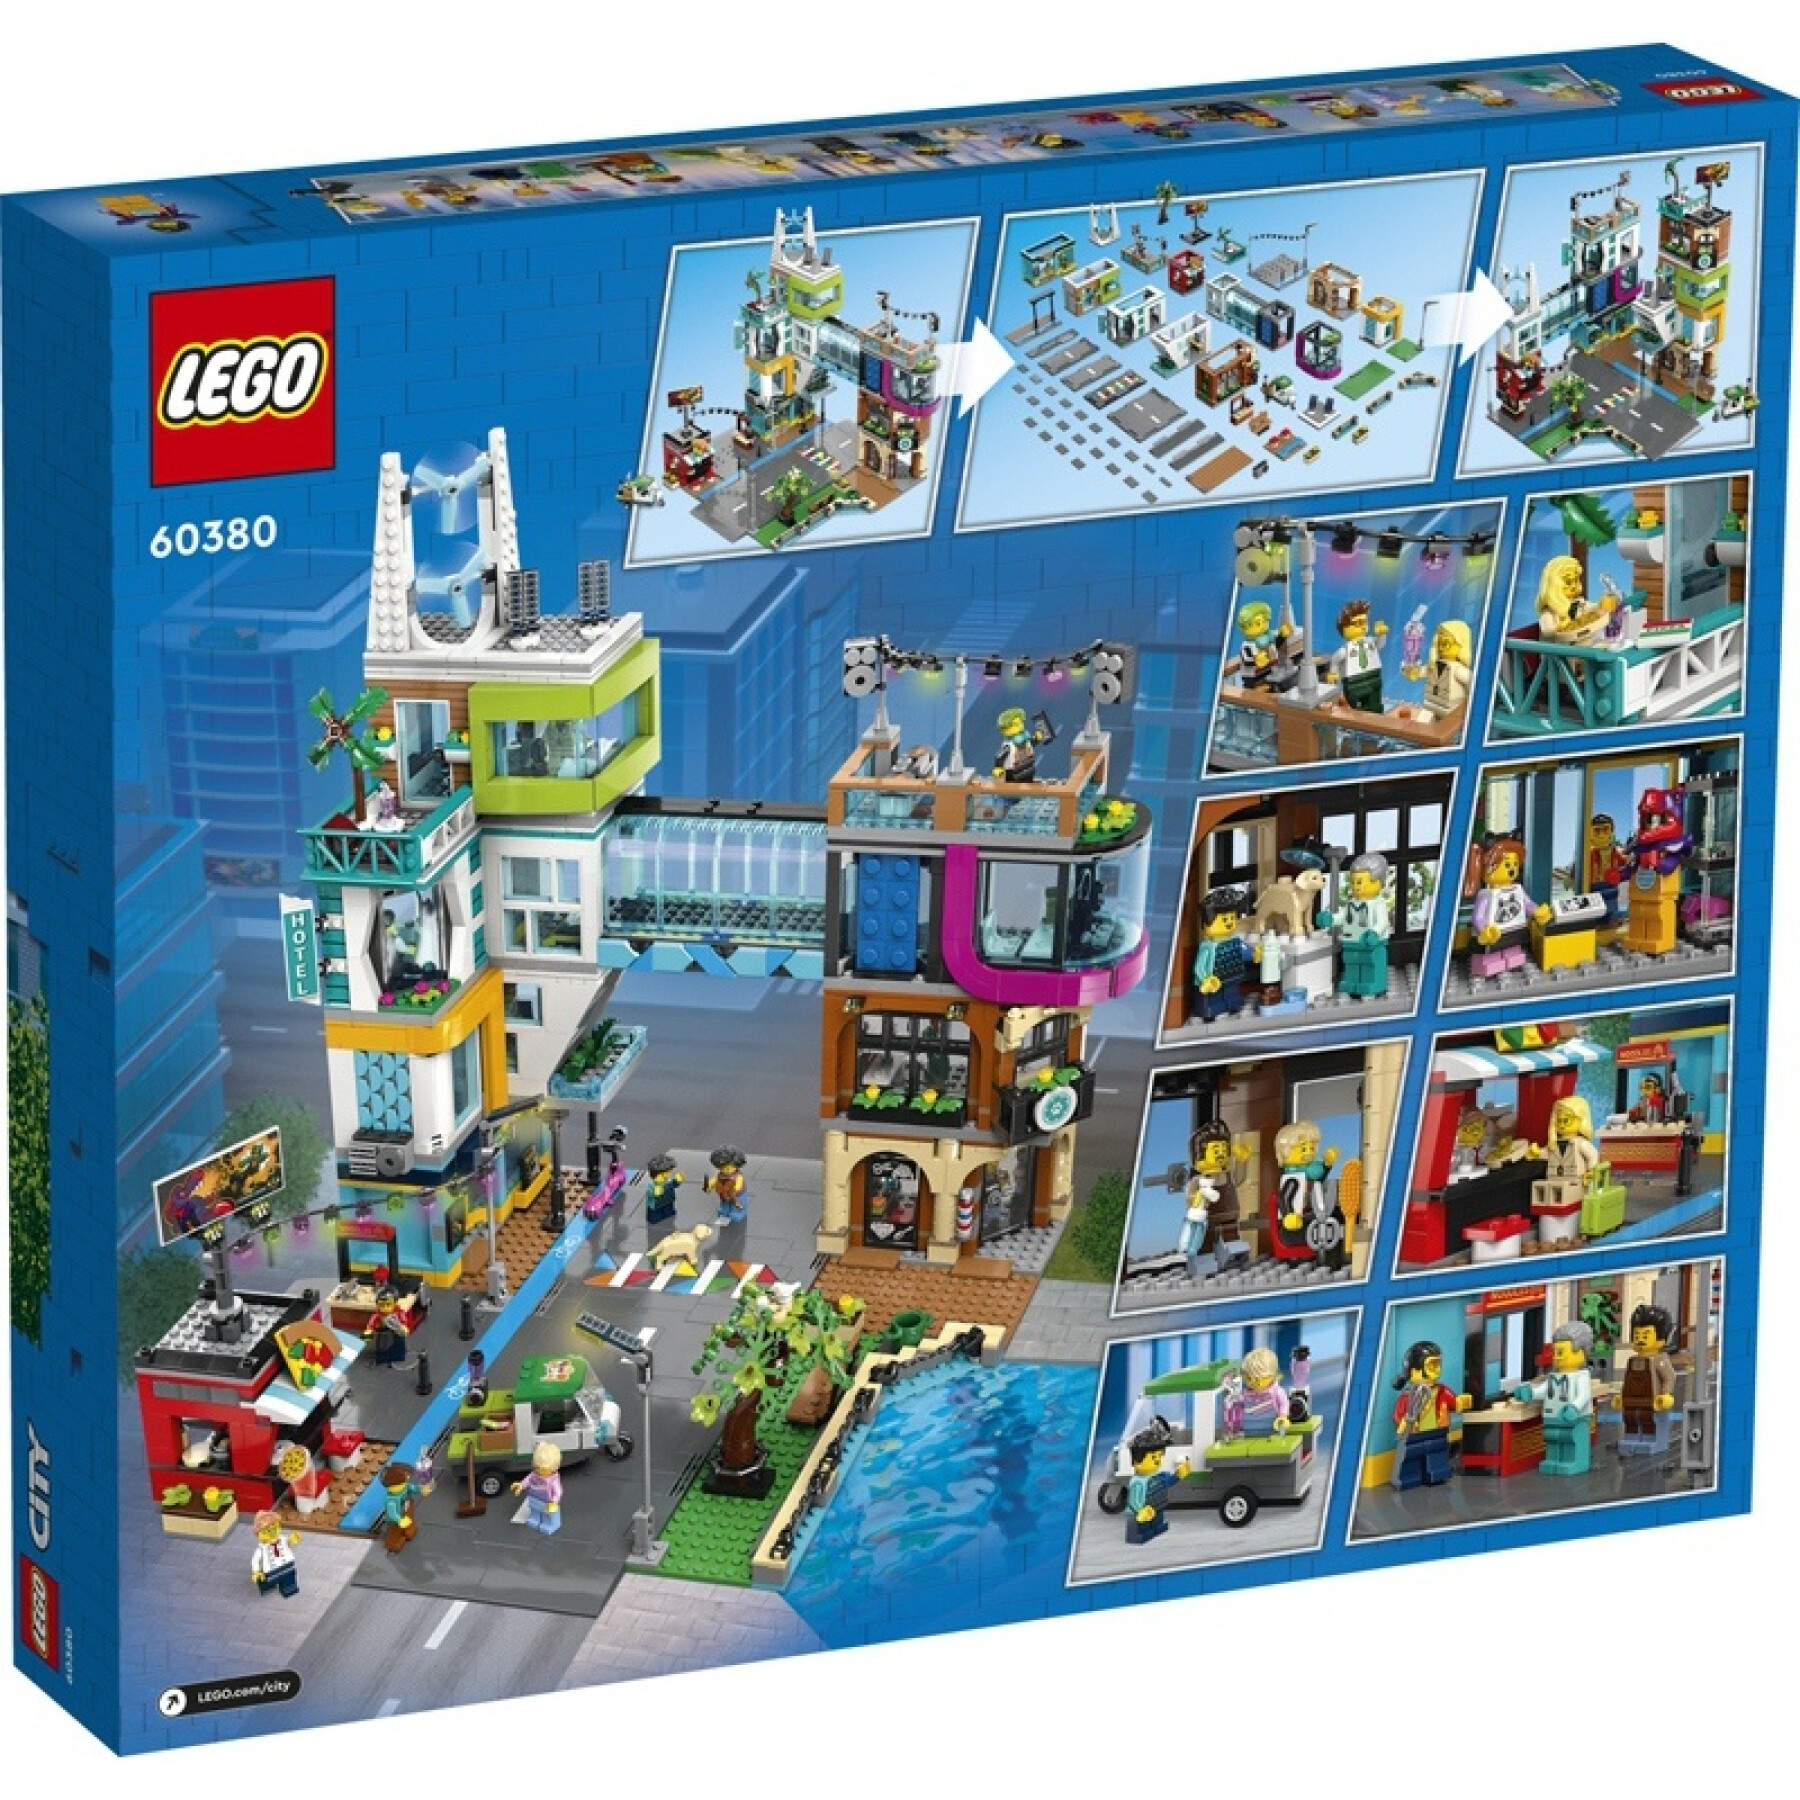 Building sets downtown Lego City